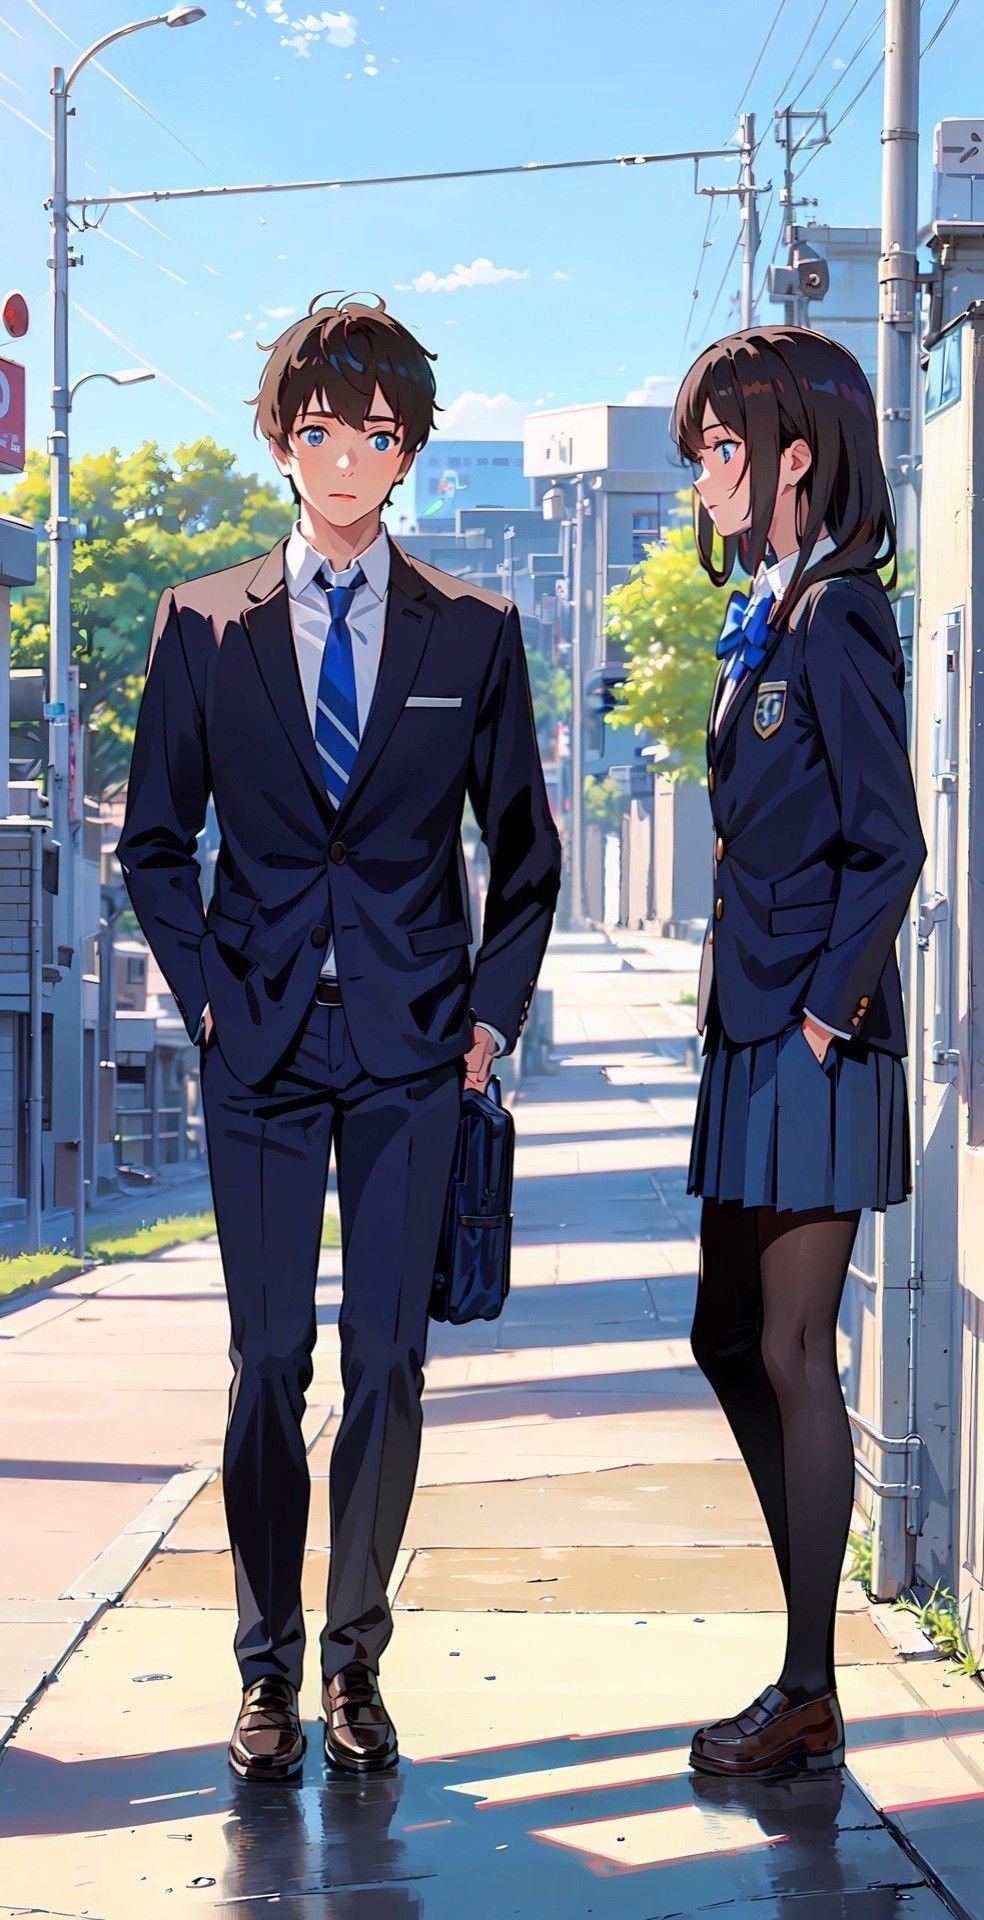 Romantic Anime Couple Wallpaper